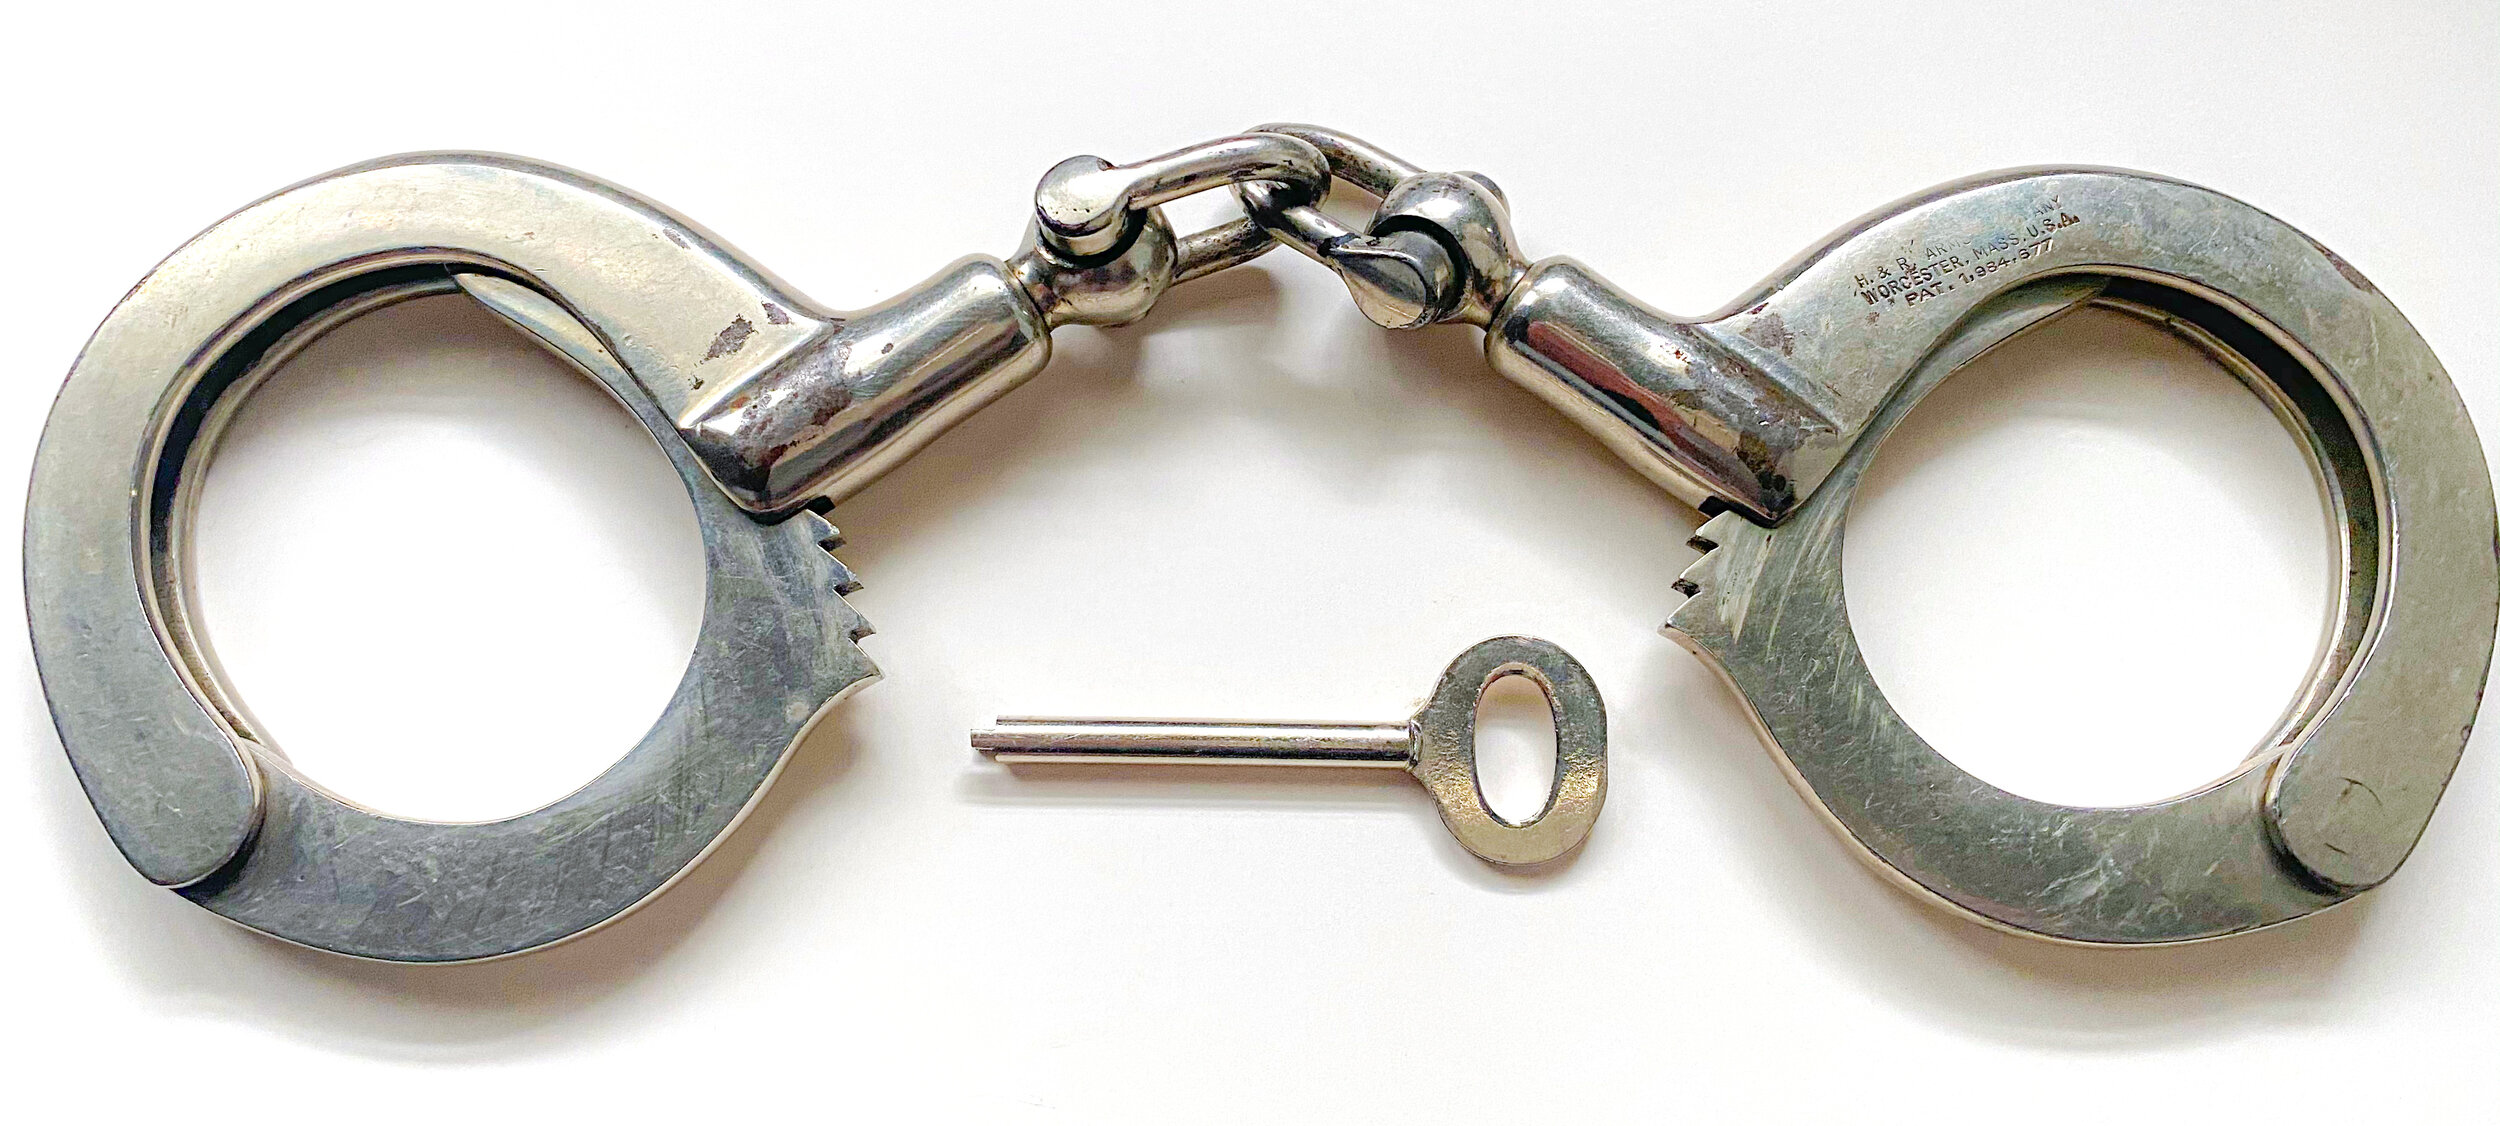 No Key Hiatt 1960 Juvenile Handcuffs GENUINE Vintage Police Prison Chain Cuffs 